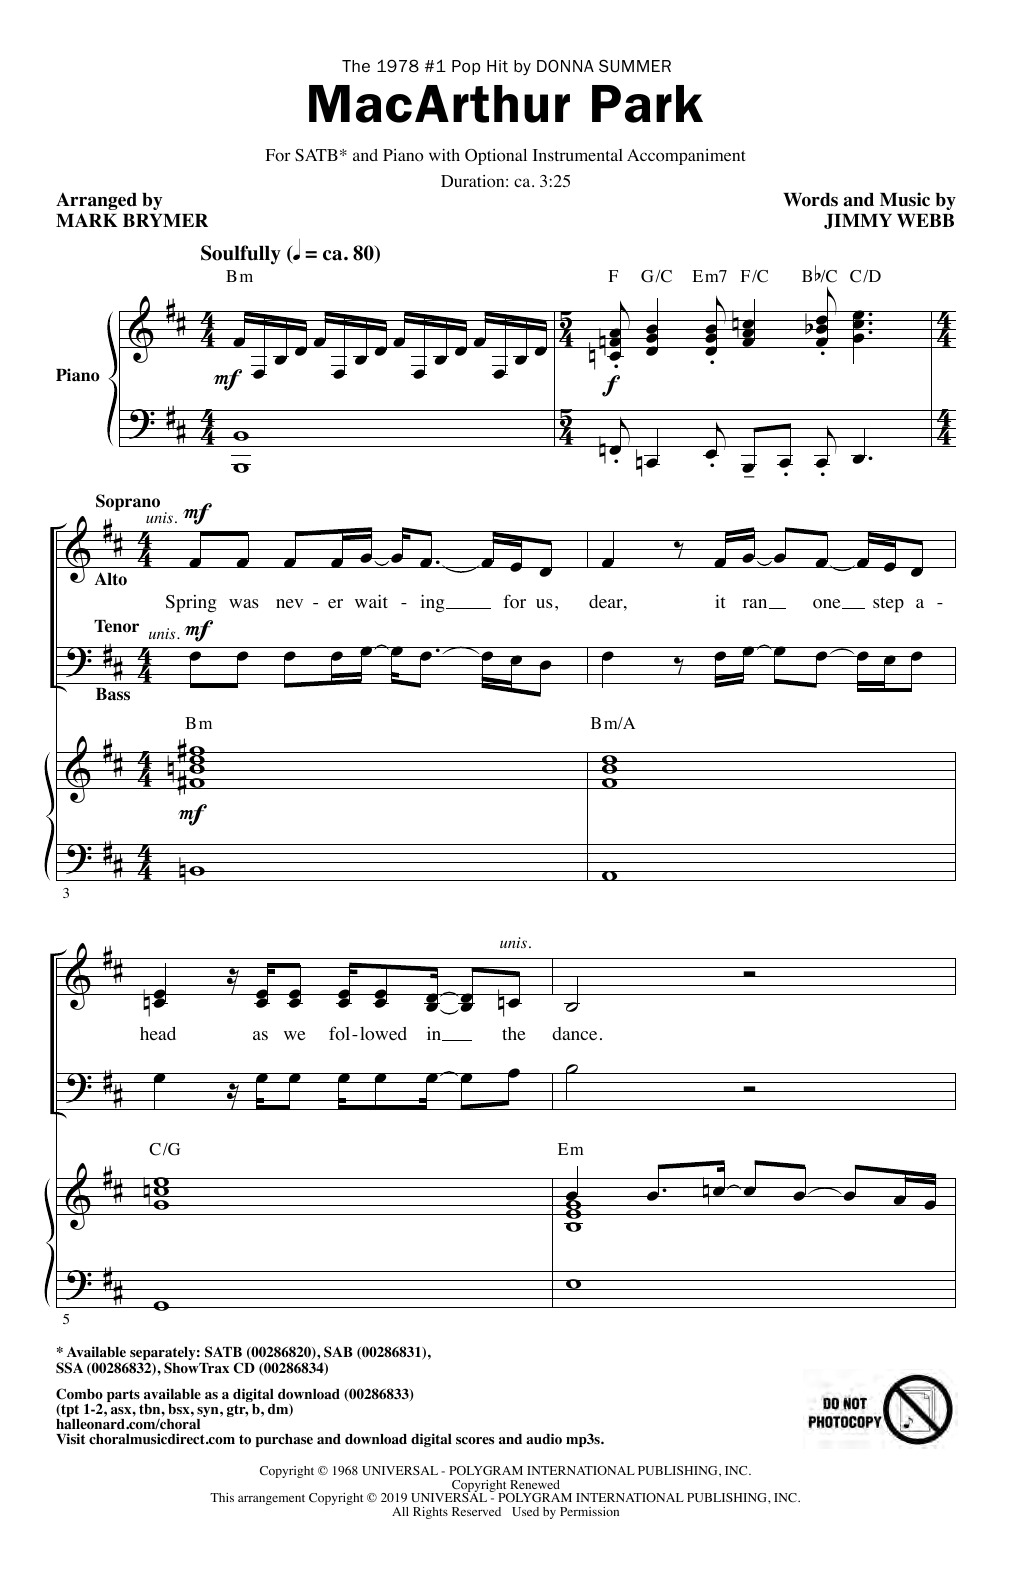 Donna Summer MacArthur Park (arr. Mark Brymer) Sheet Music Notes & Chords for SATB Choir - Download or Print PDF